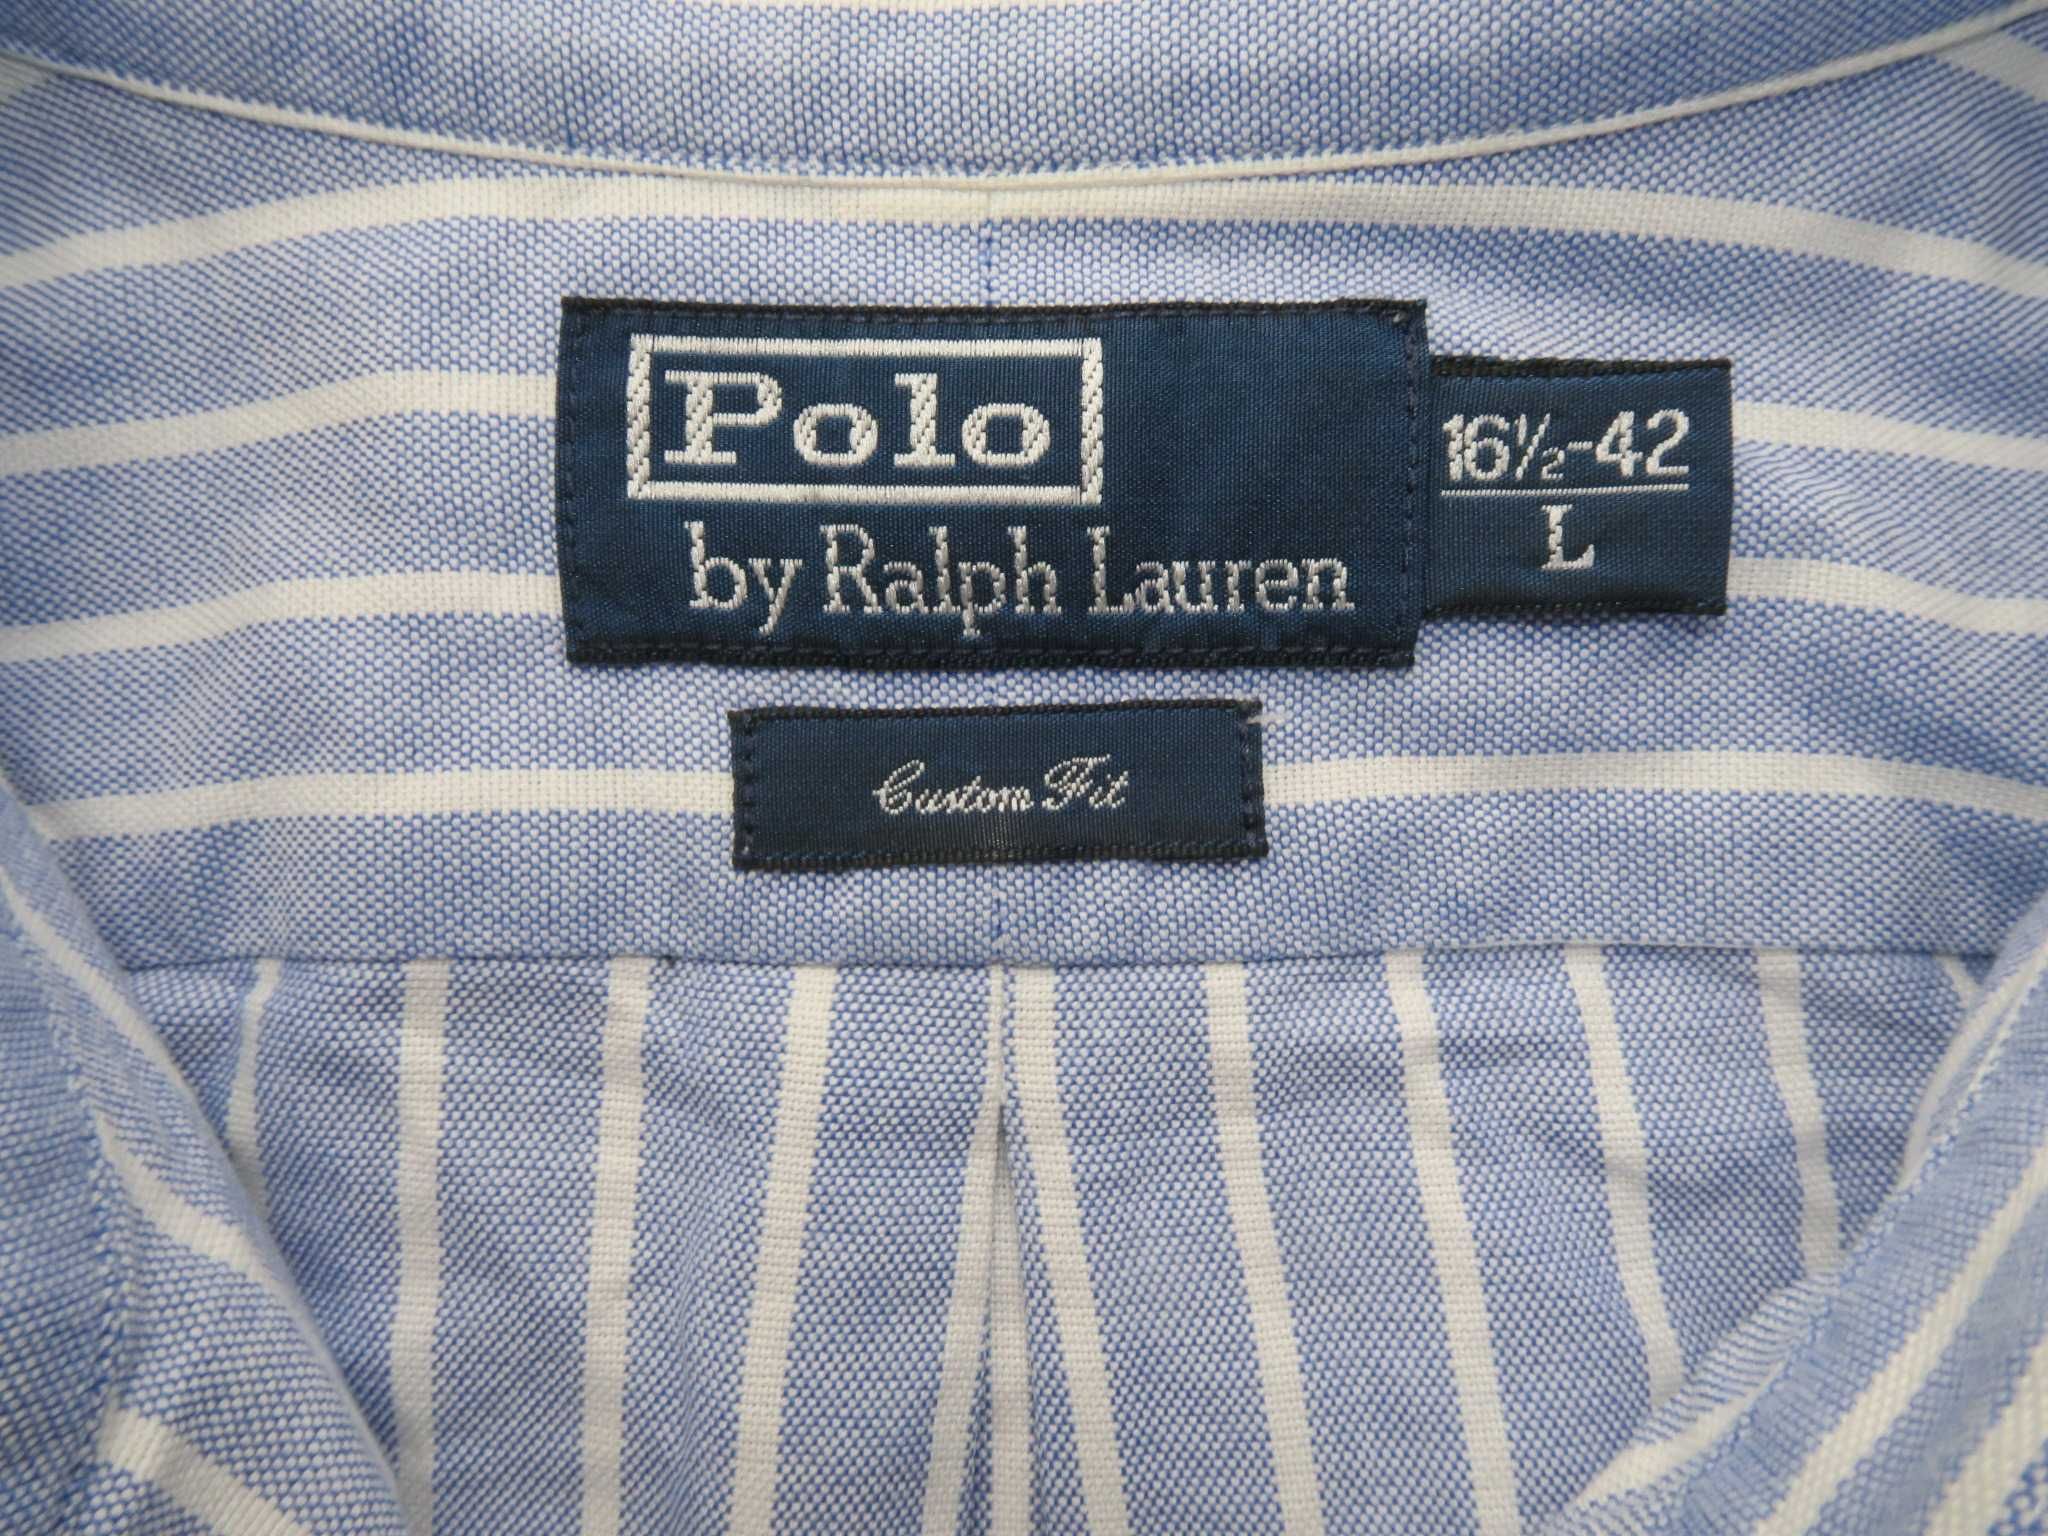 Ralph Lauren koszula w paski multicolor logo 16 1/2-42 L/XL